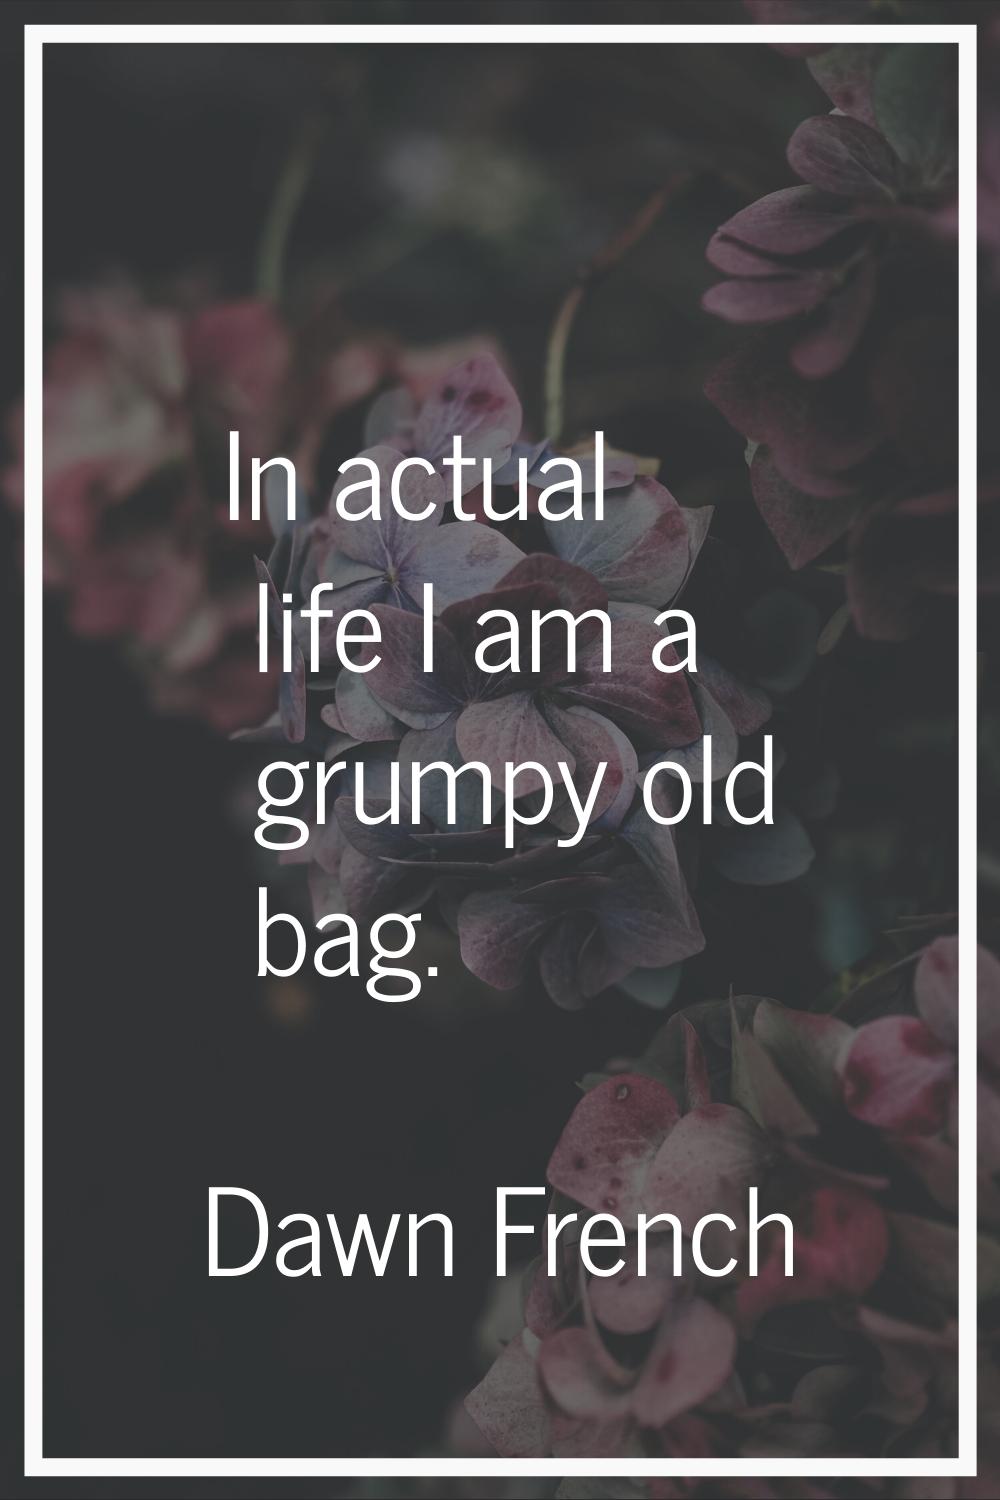 In actual life I am a grumpy old bag.